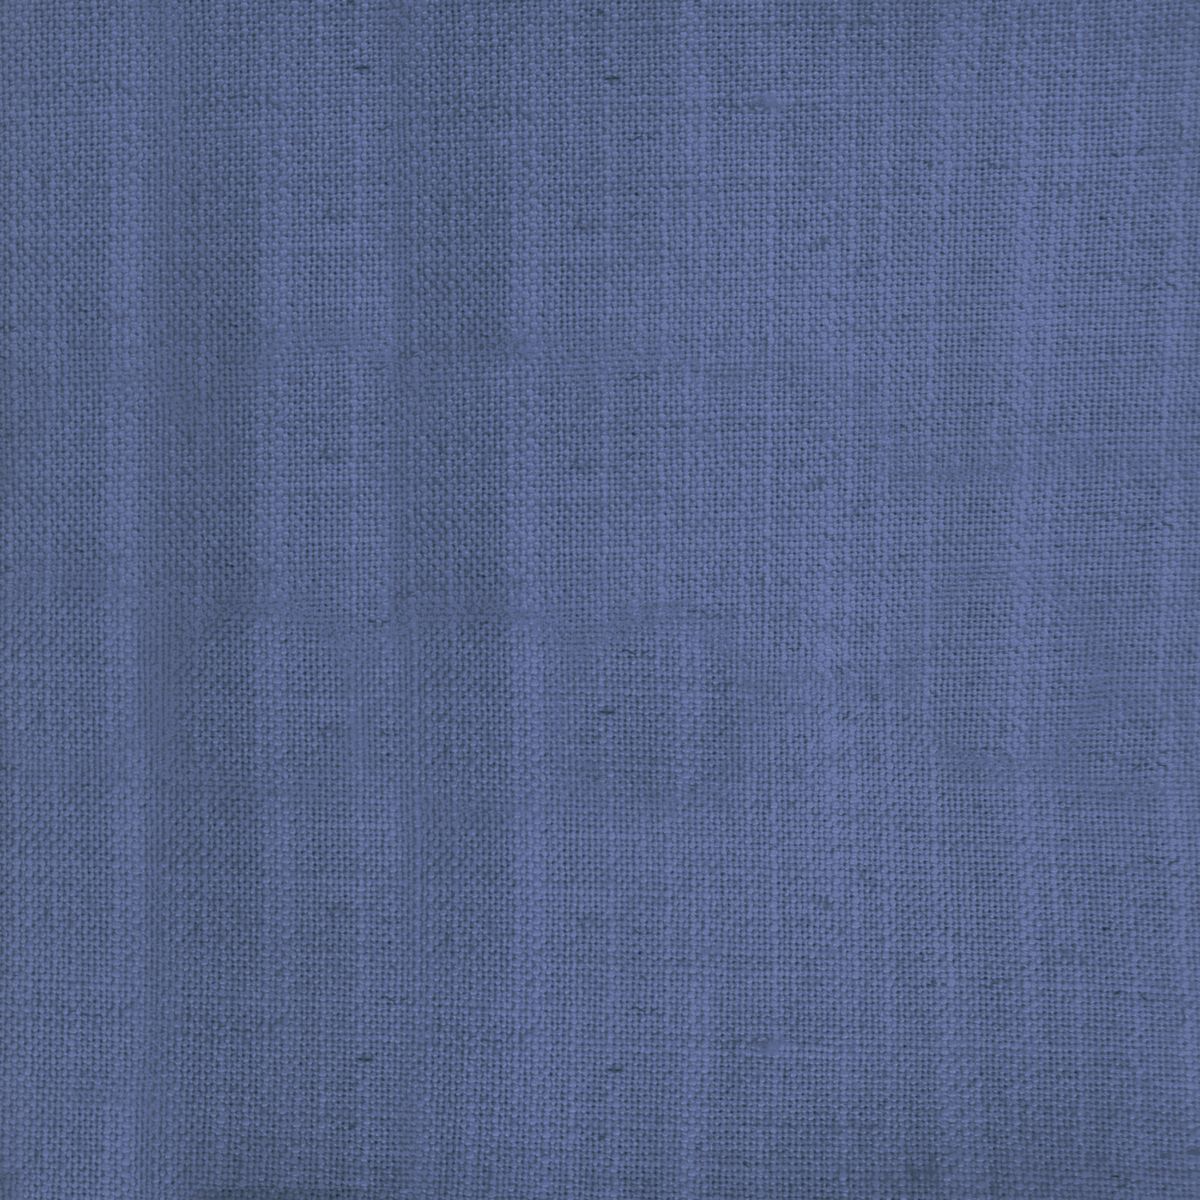 Tivoli Bluebell Fabric by Voyage Maison